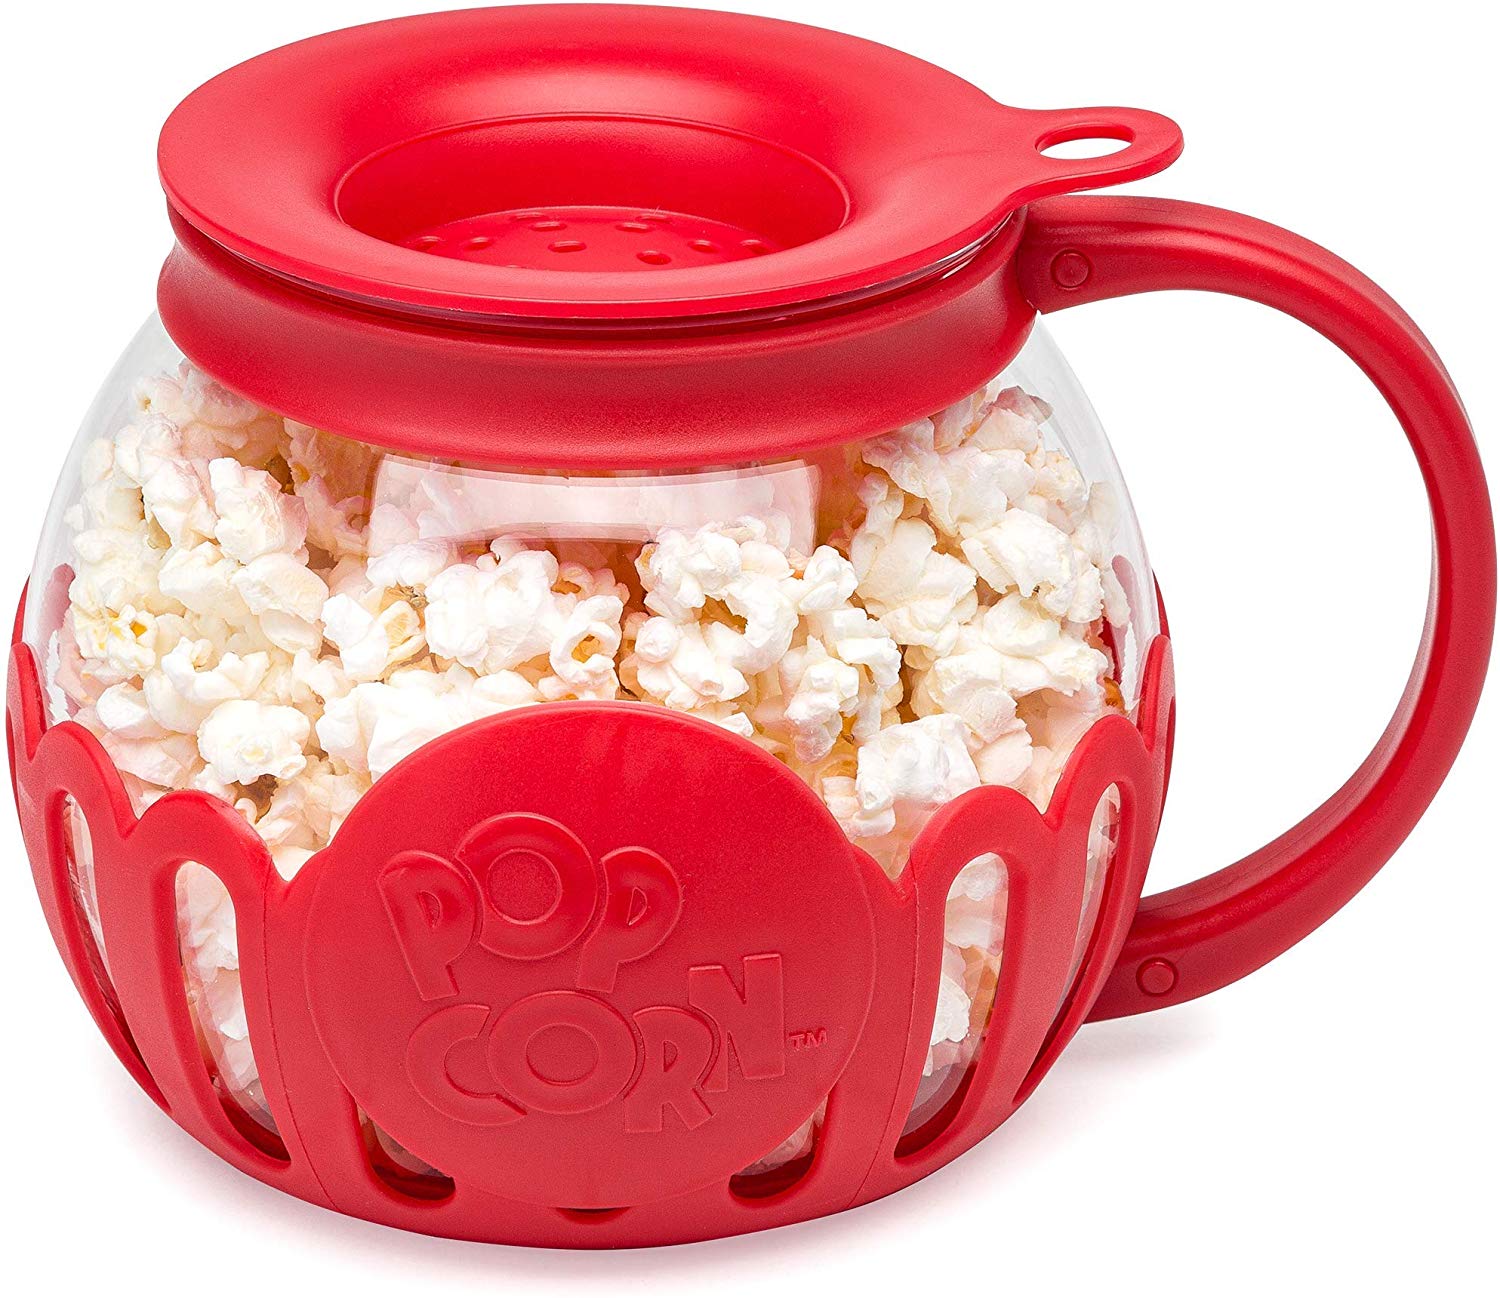 Best Gifts For Millennials 2022: Microwave Popcorn Maker 2022